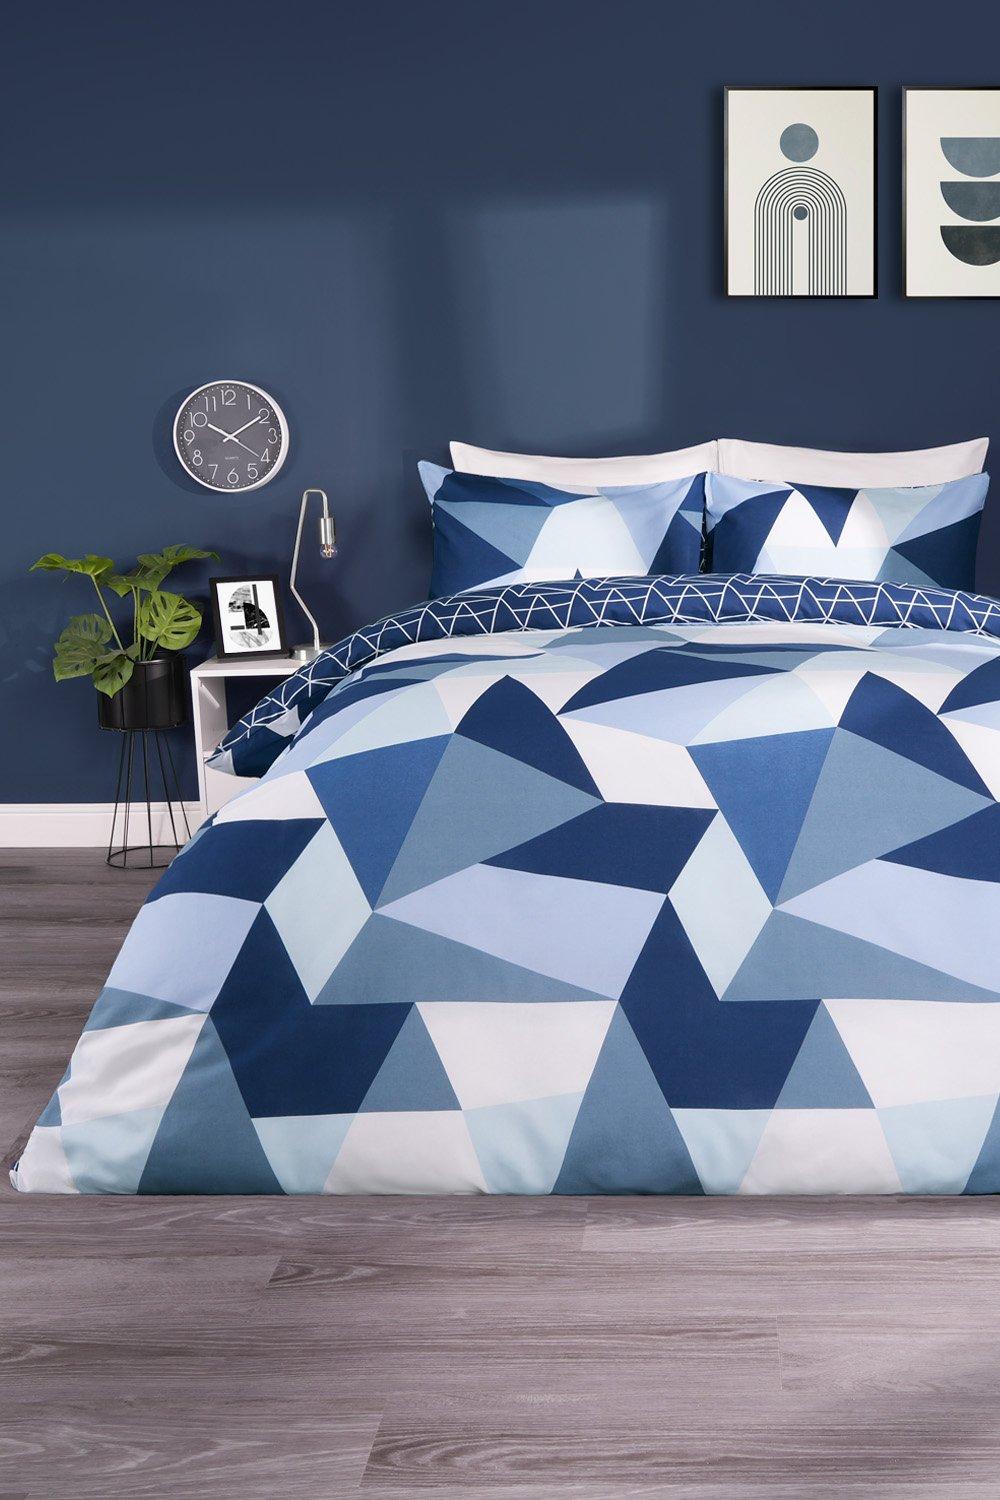 Dreamscene Geometric Shapes Duvet Cover with Pillowcase Set Bedding Quilt